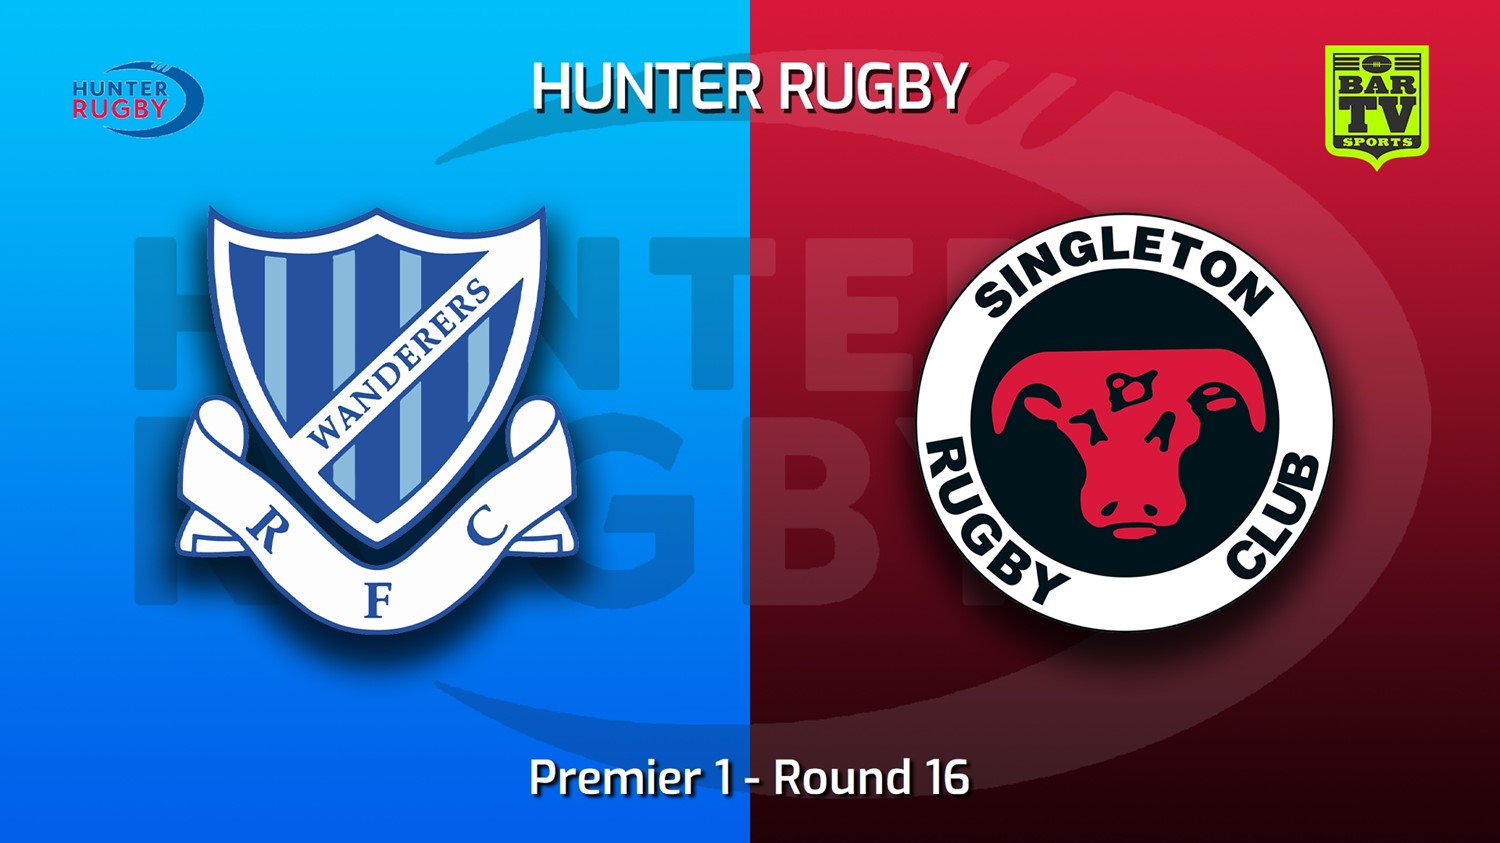 220813-Hunter Rugby Round 16 - Premier 1 - Wanderers v Singleton Bulls Minigame Slate Image